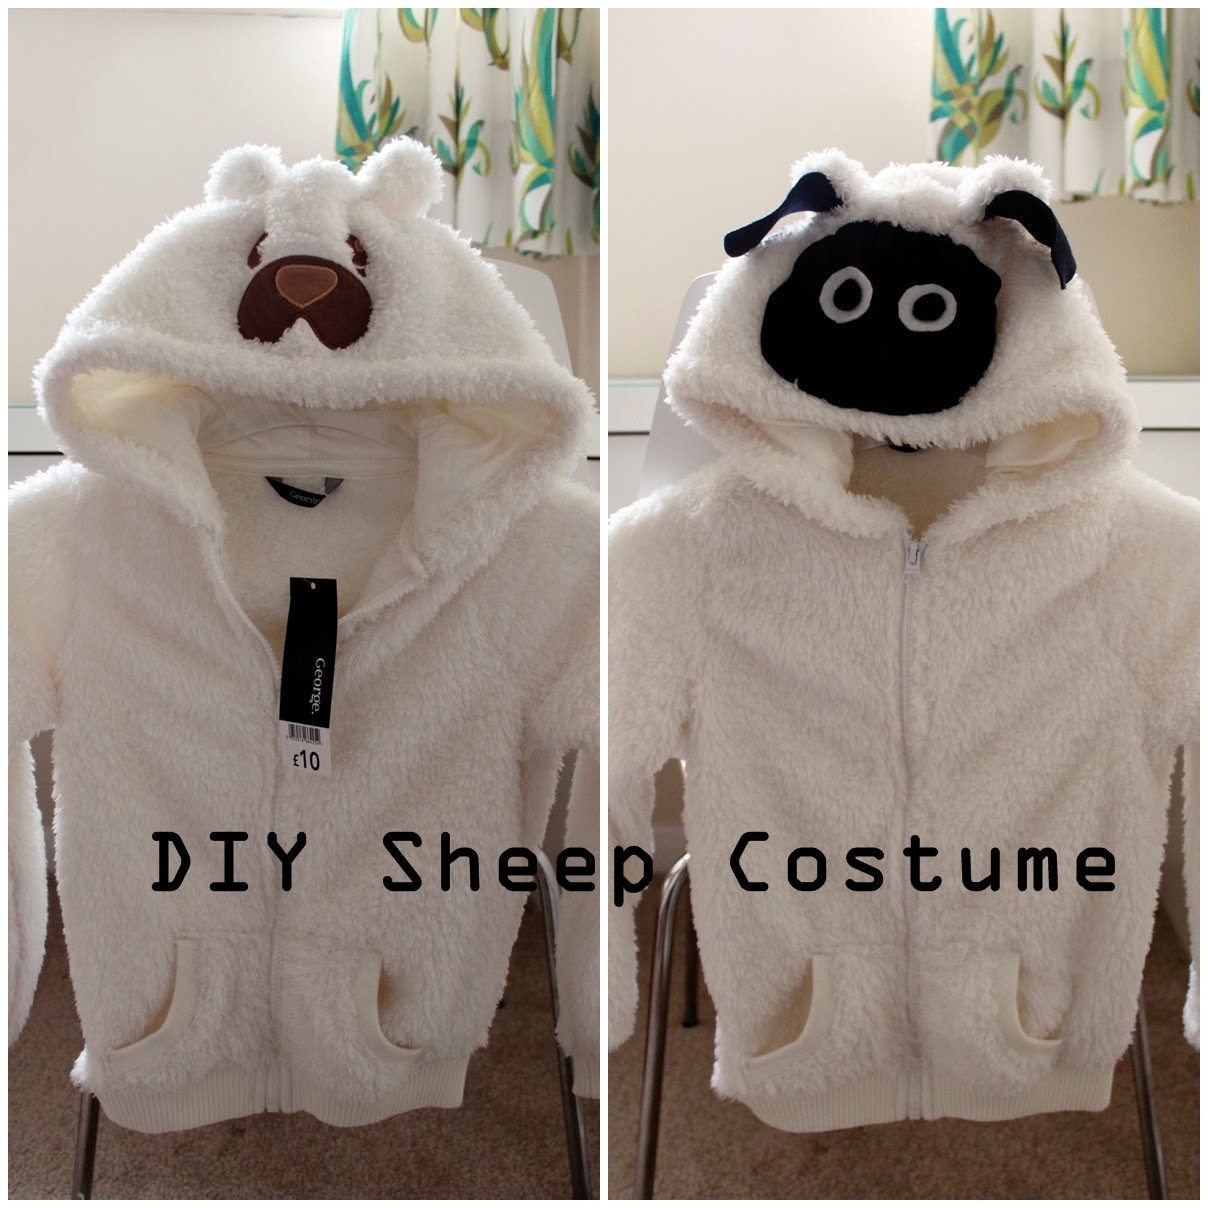 DIY Sheep Costume
 DIY Sheep Costume